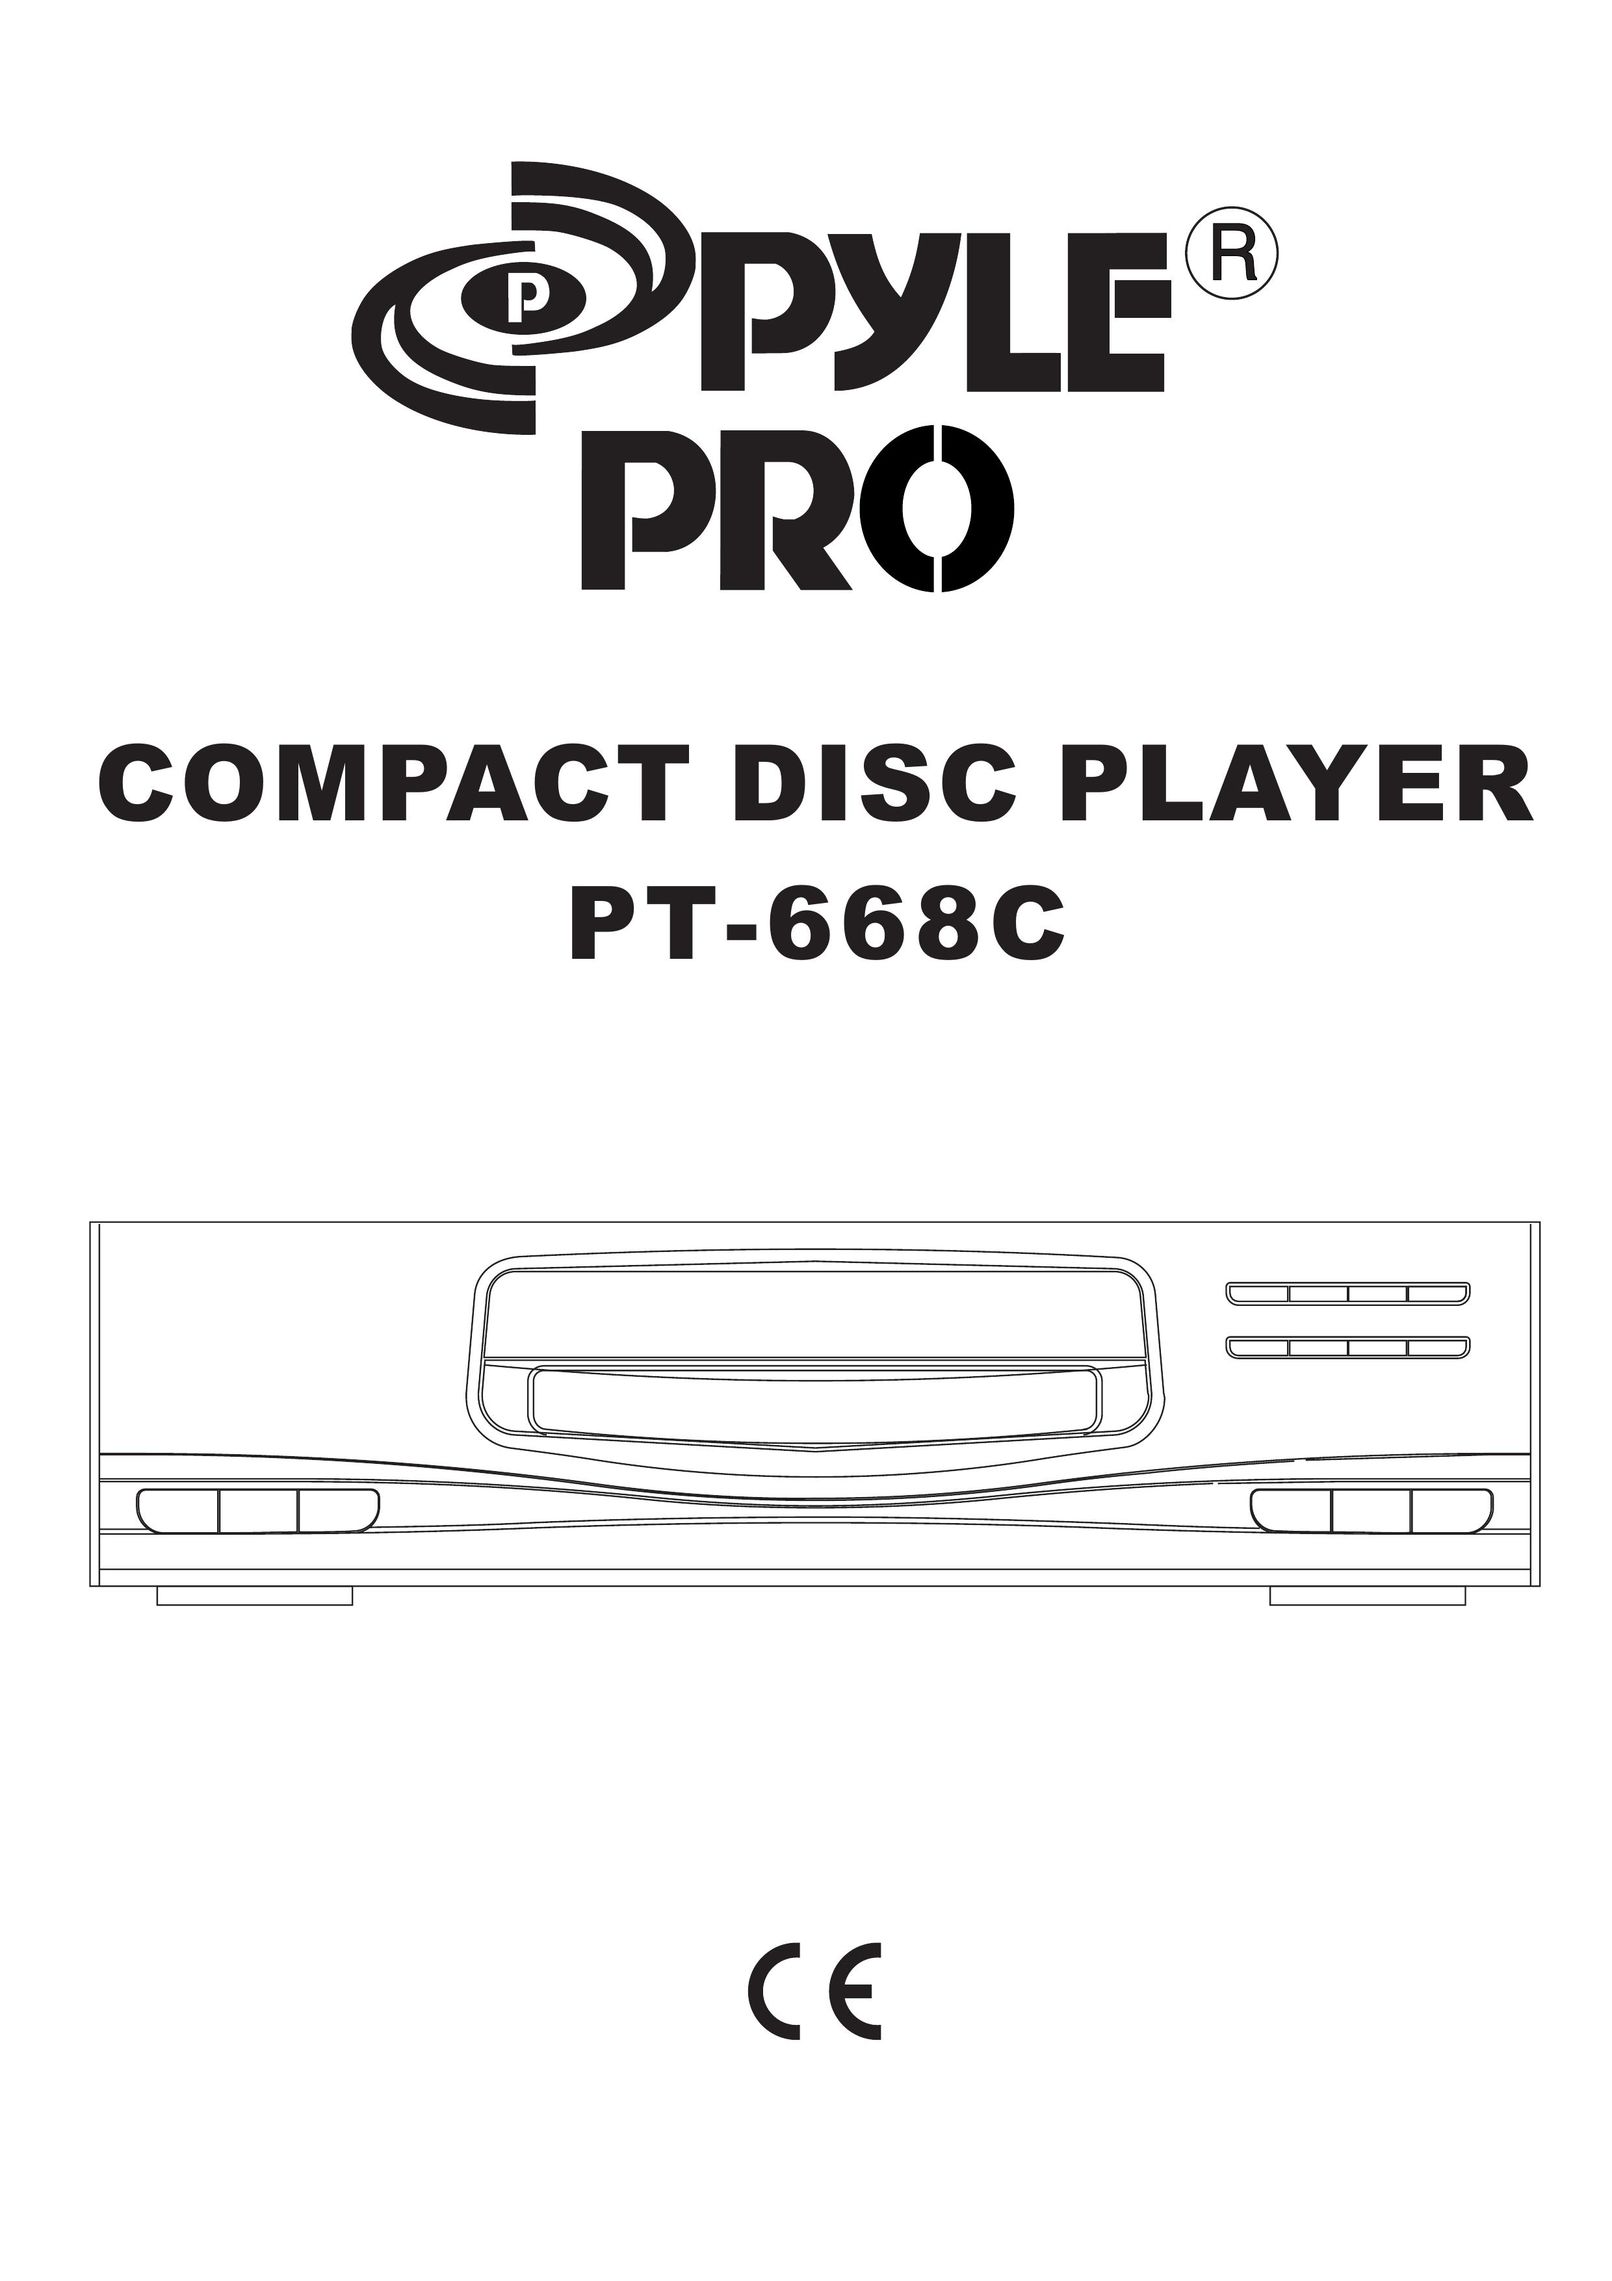 Radio Shack PT-668C CD Player User Manual